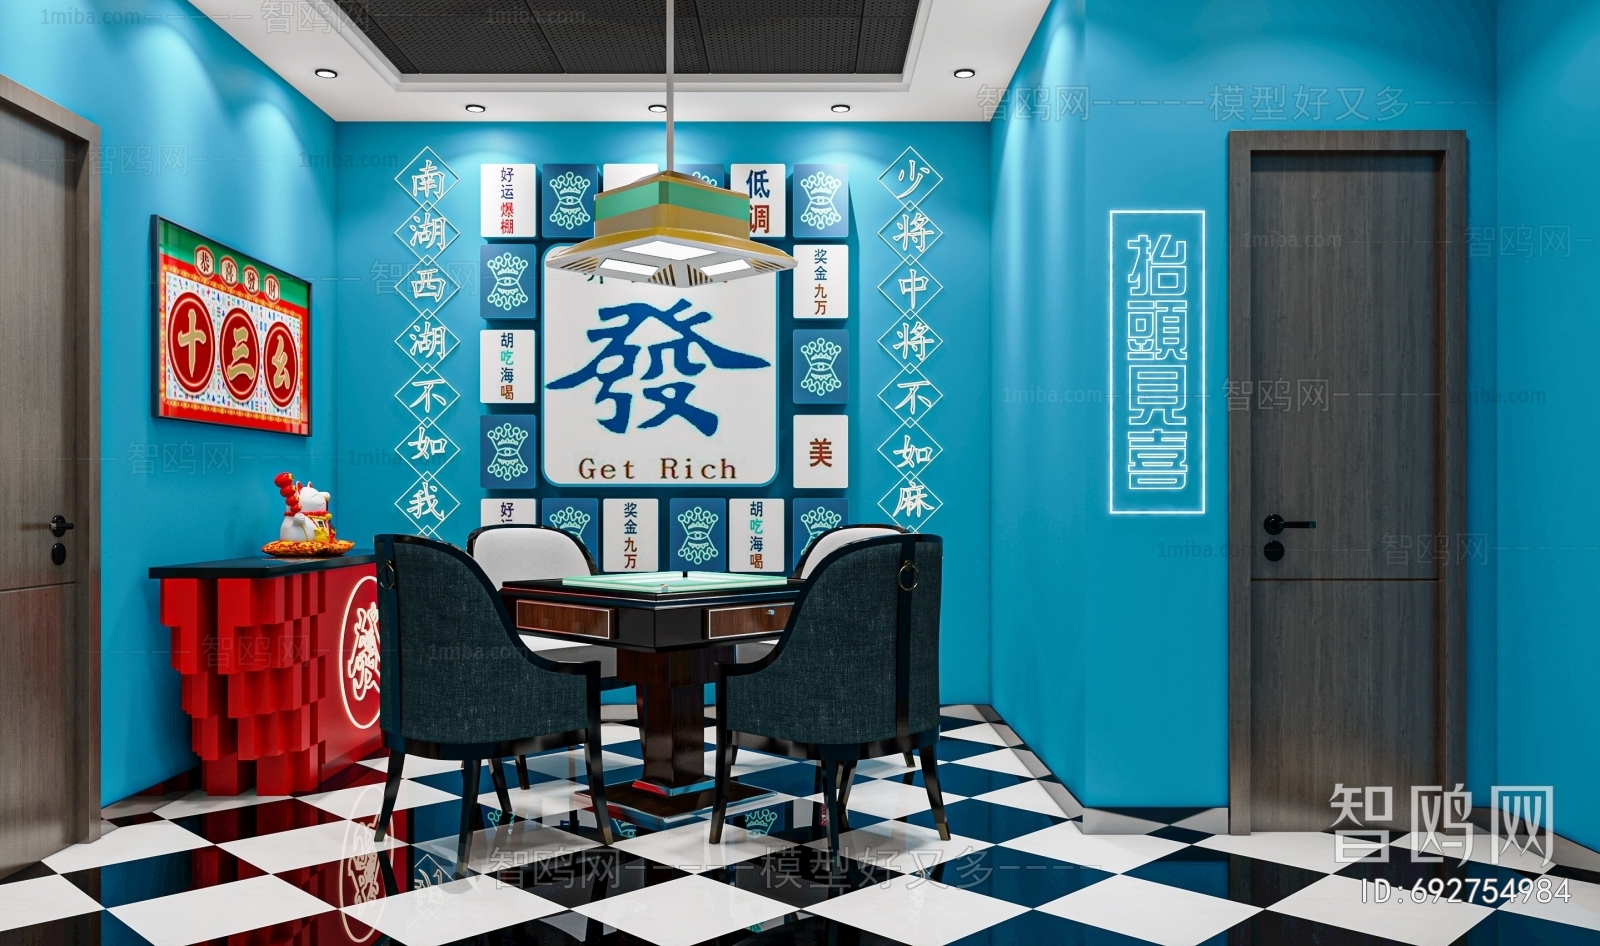 Hong Kong Style Chess And Card Room